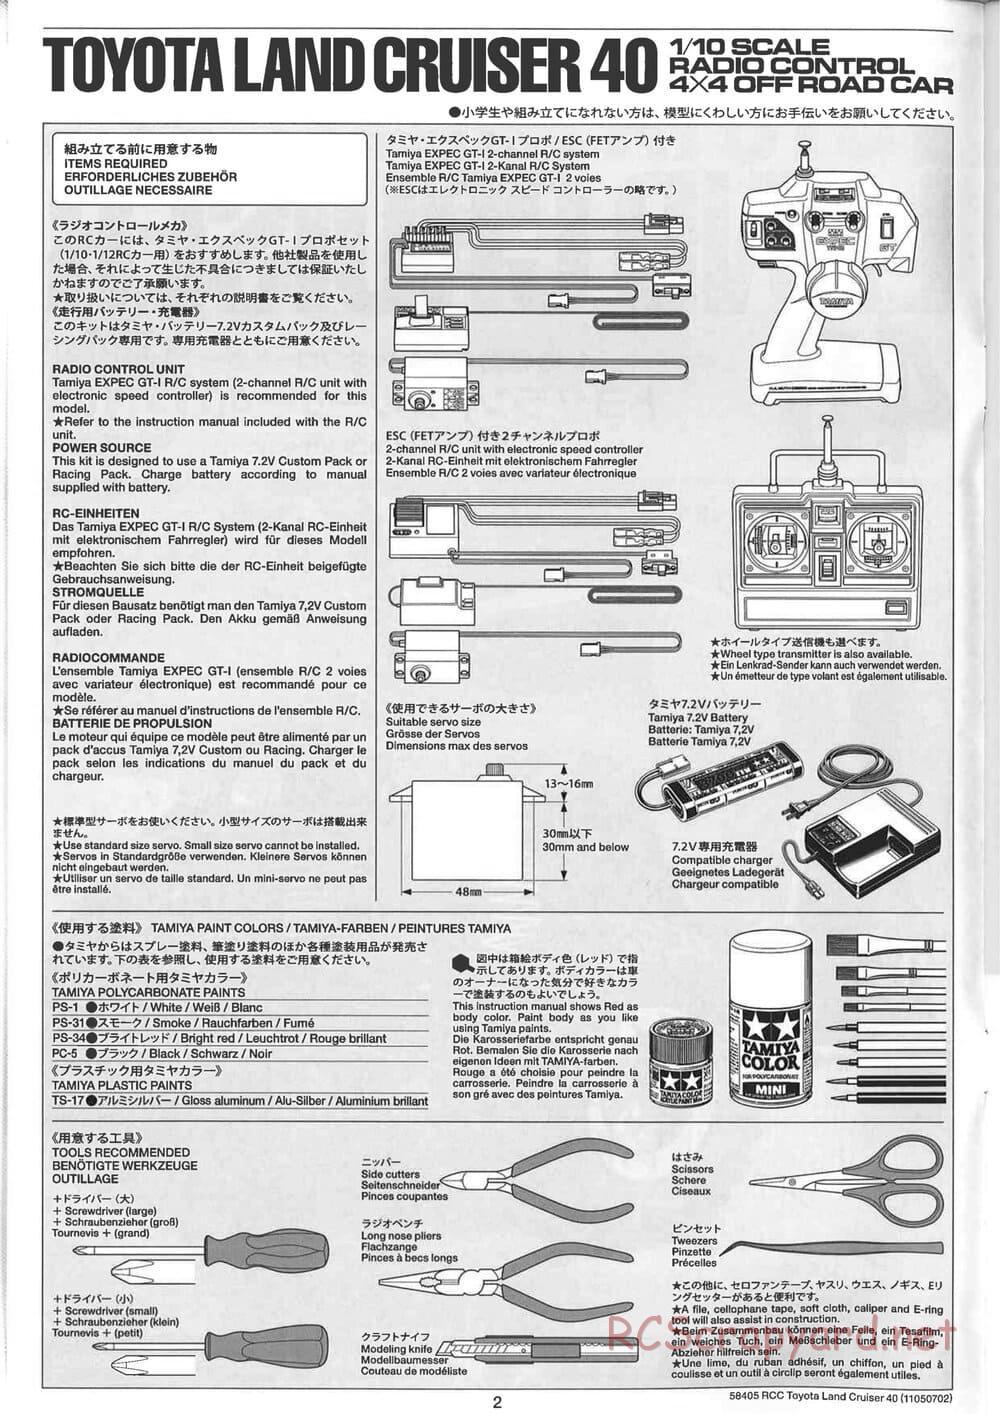 Tamiya - Toyota Land Cruiser 40 - CR-01 Chassis - Manual - Page 2